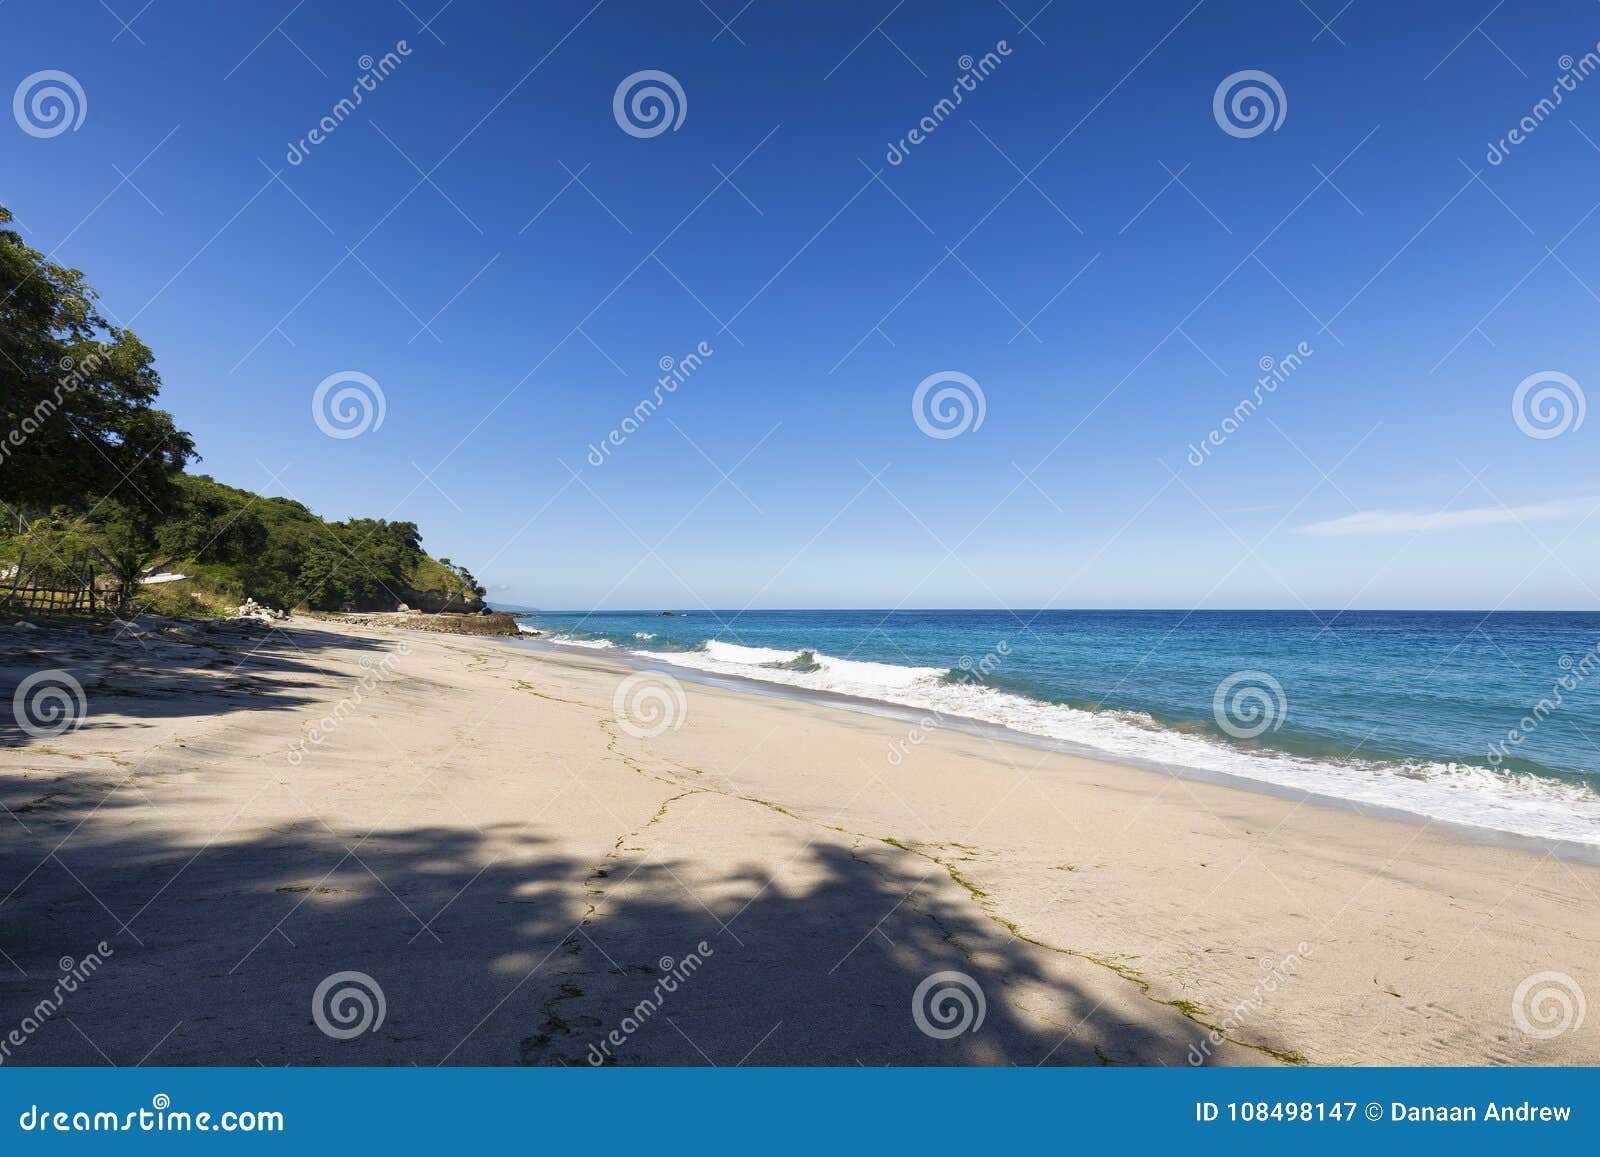 empty paga beach view